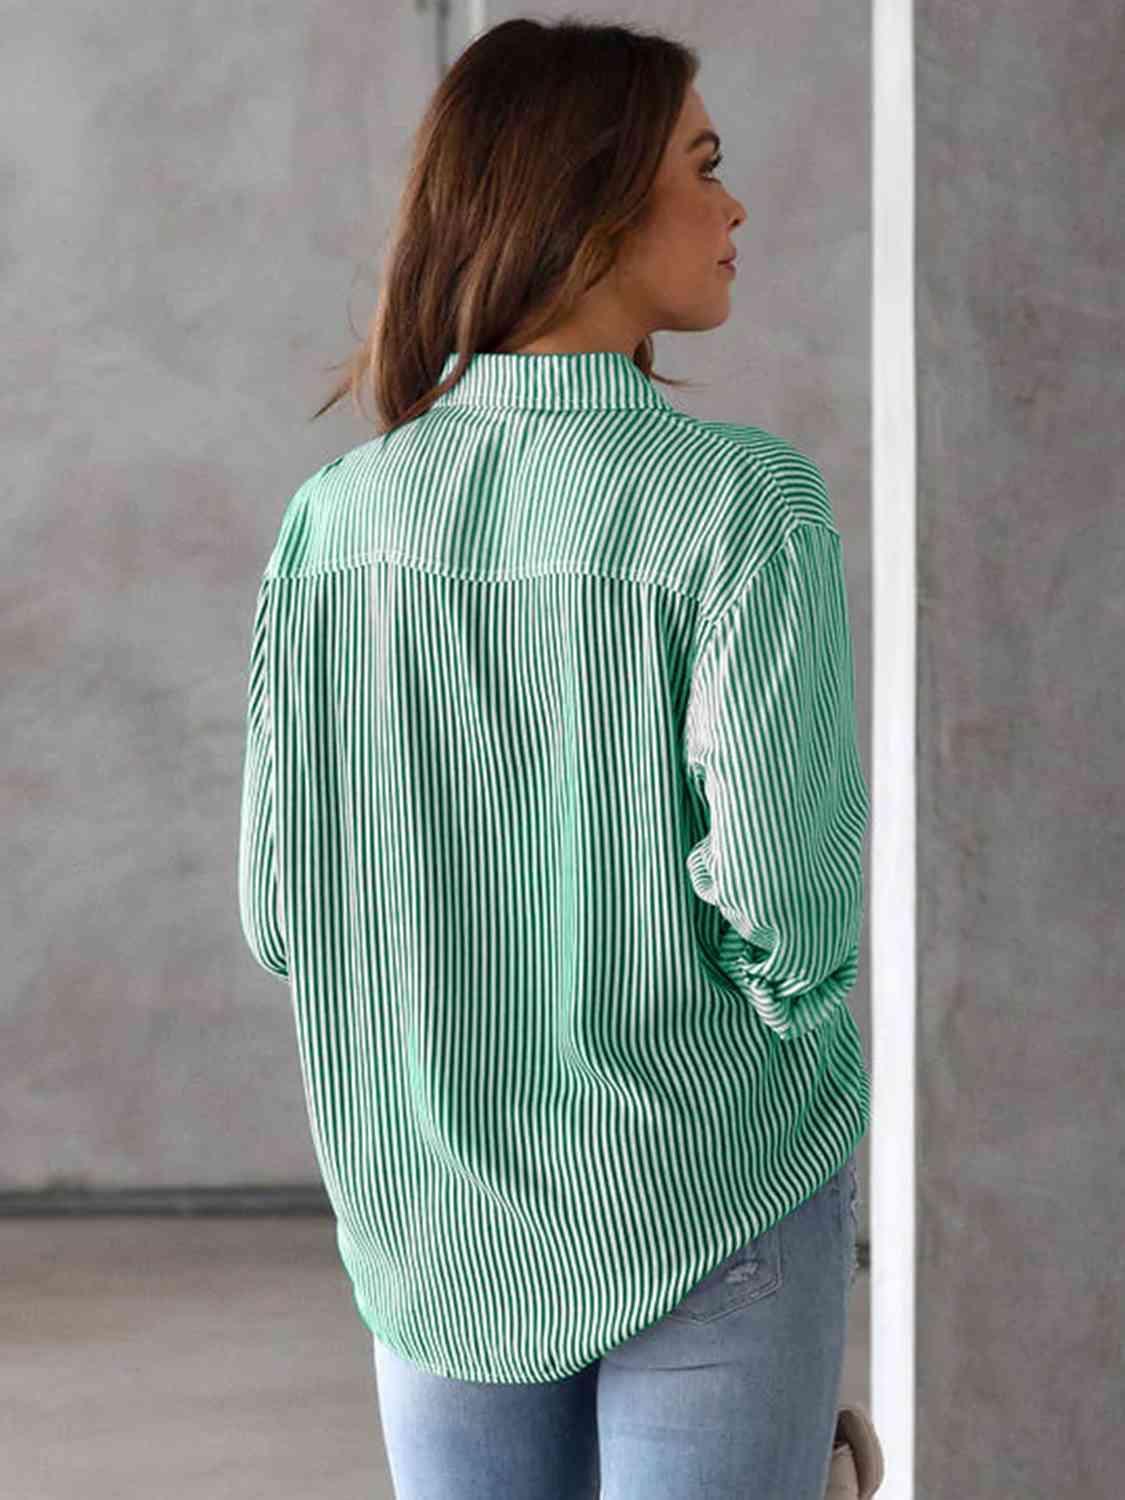 Striped Collared Neck Shirt with Pocket - Bona Fide Fashion